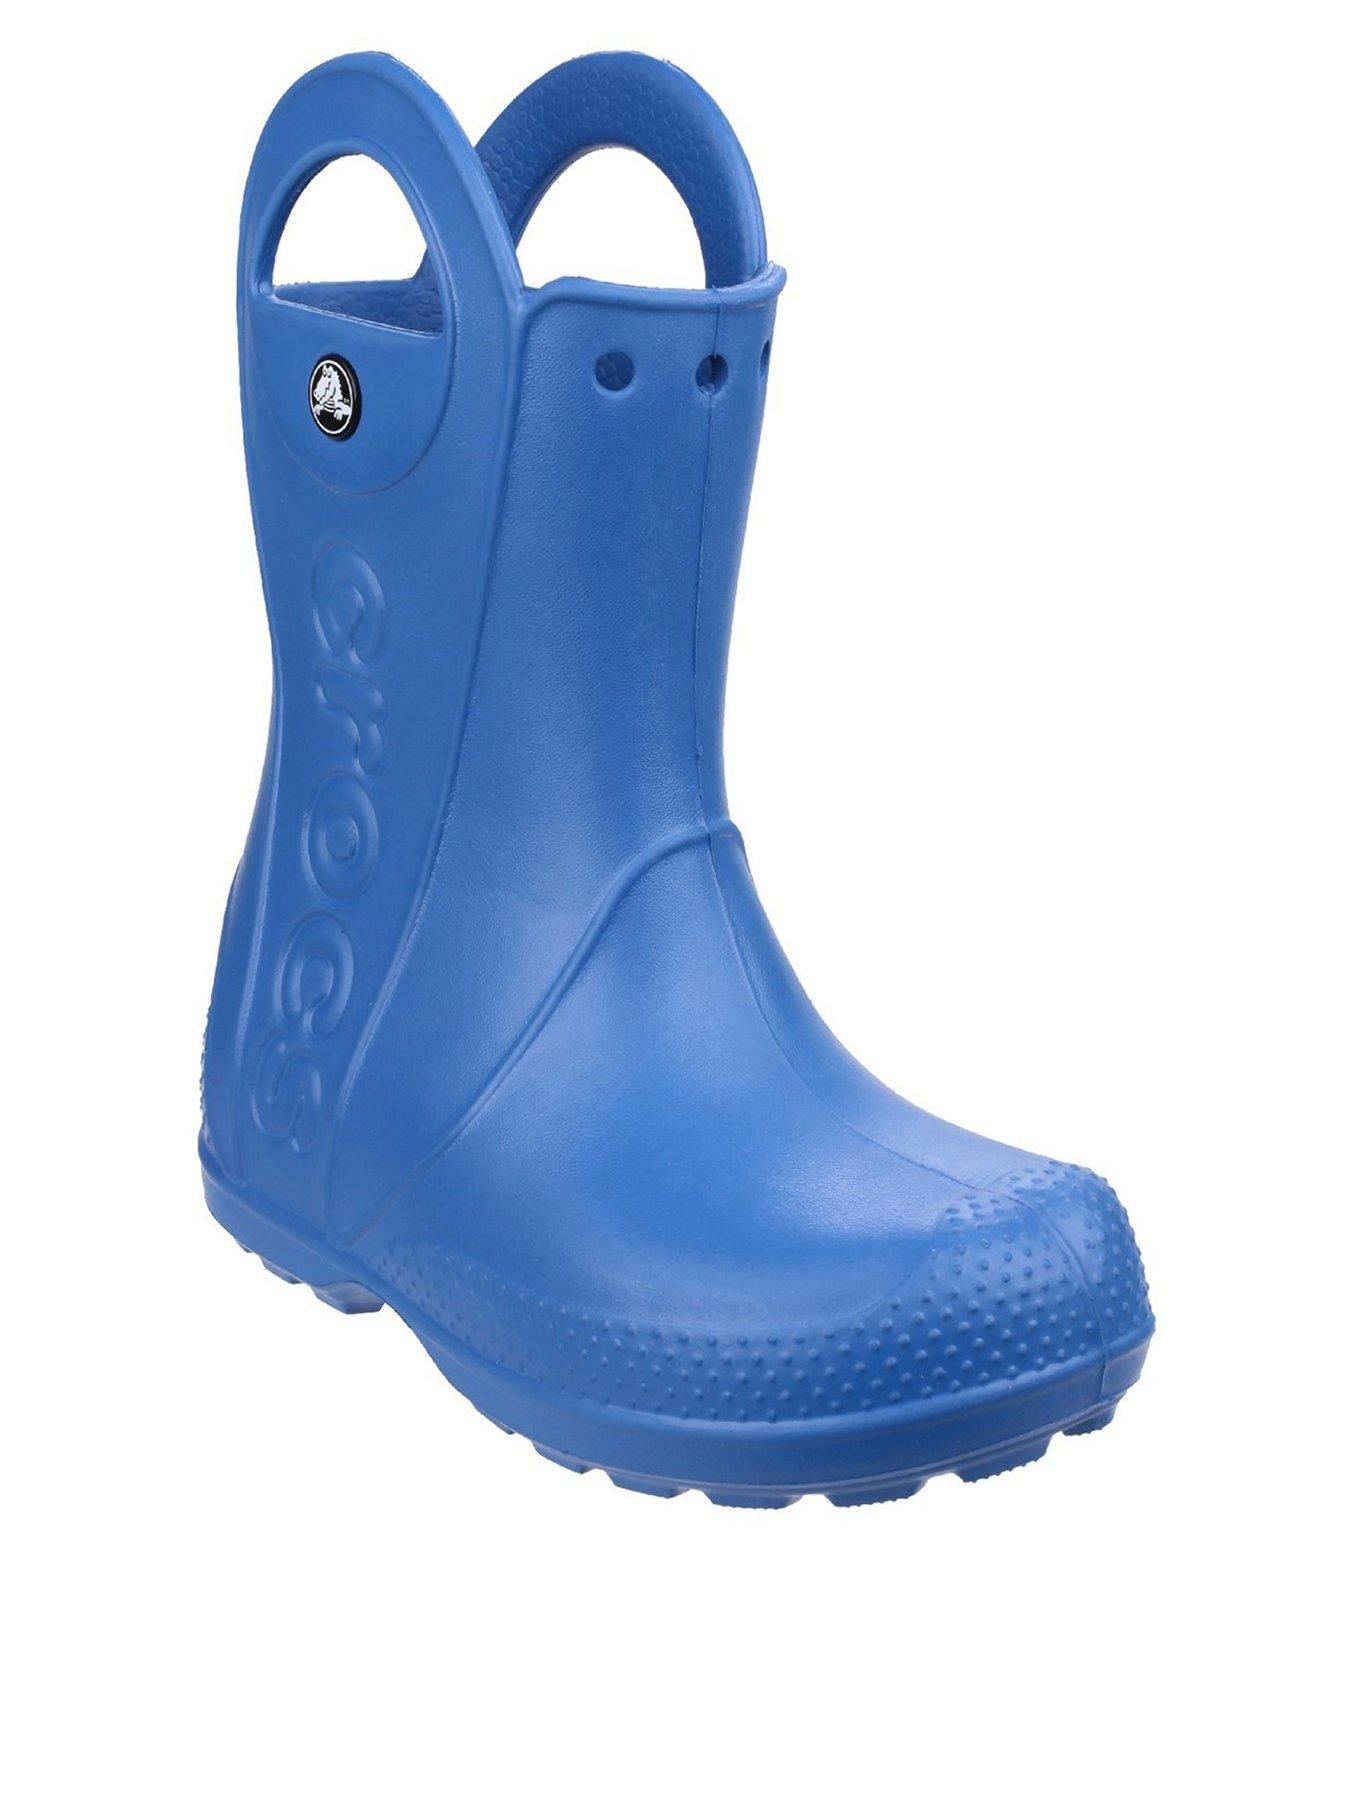 crocs wellington boots